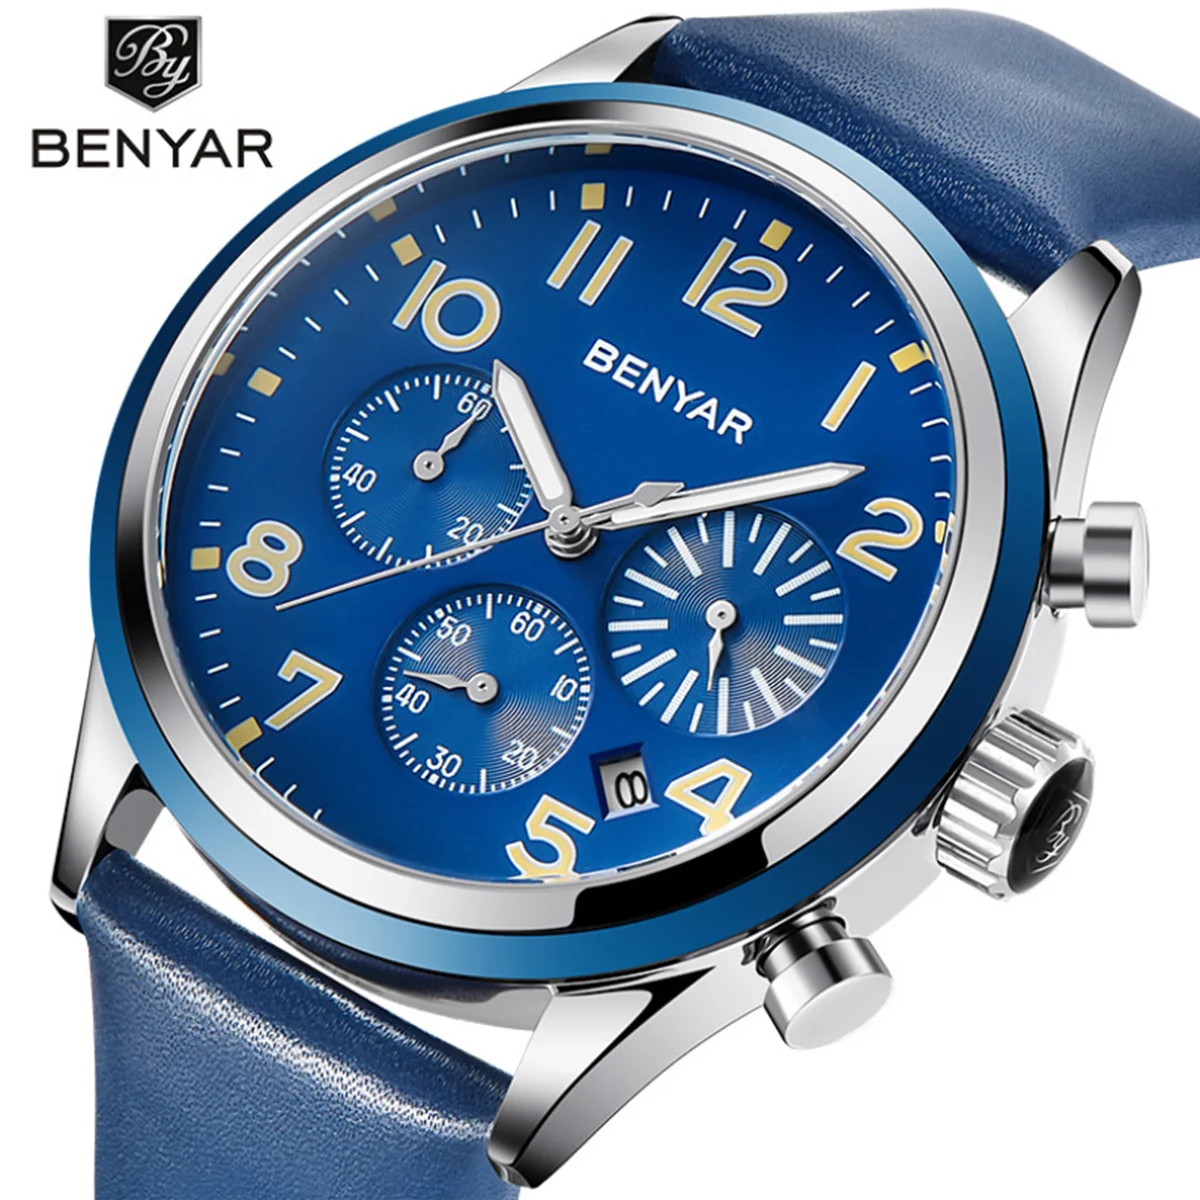 

custom stainless steel chain wrist watch benyar 5138 Orologio da uomo large arabic numbers cheap business chronograph watches